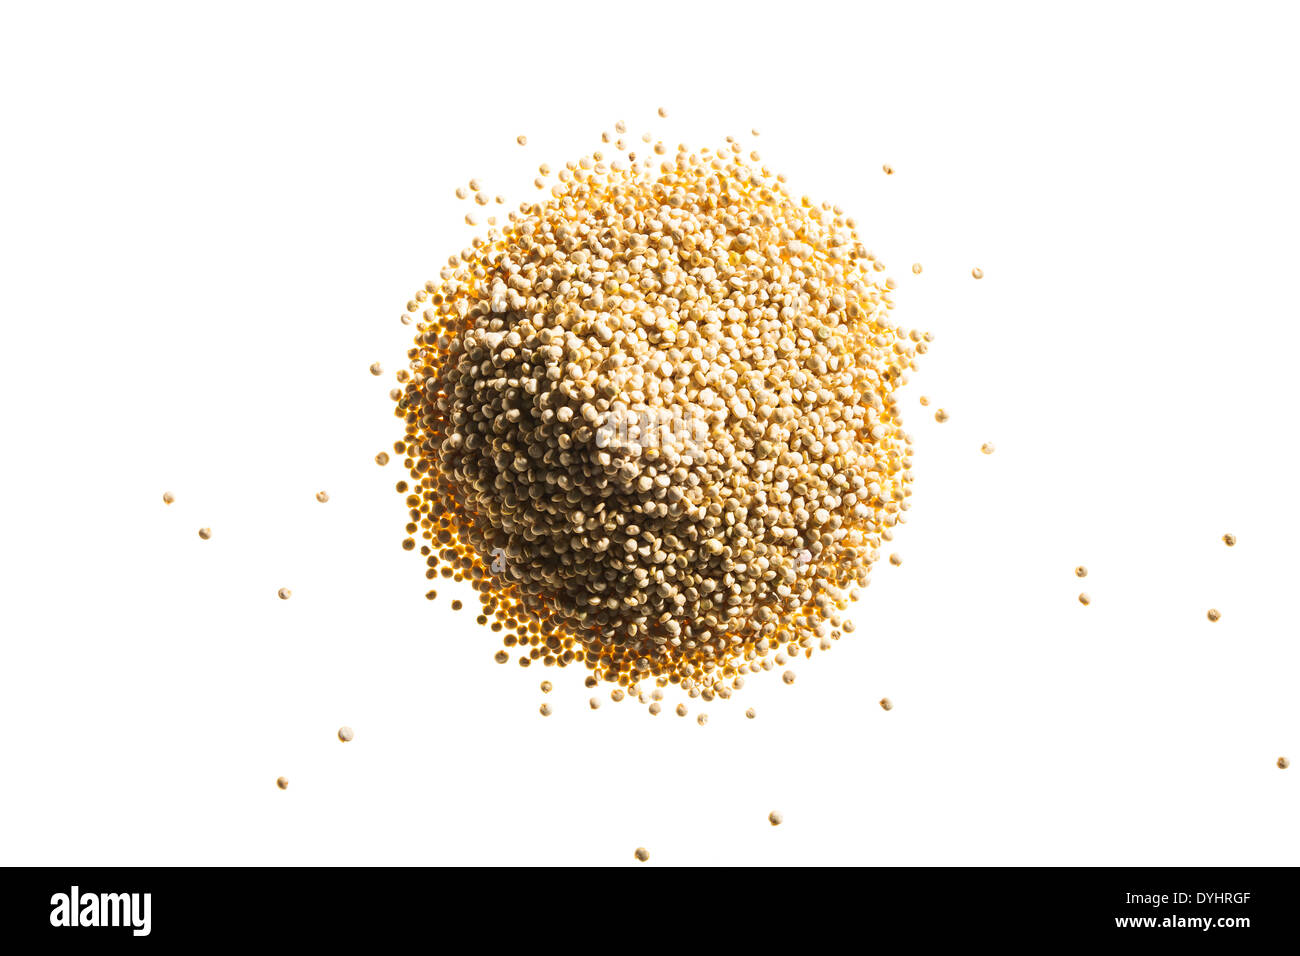 Pile of Quinoa Seeds on White Background Stock Photo